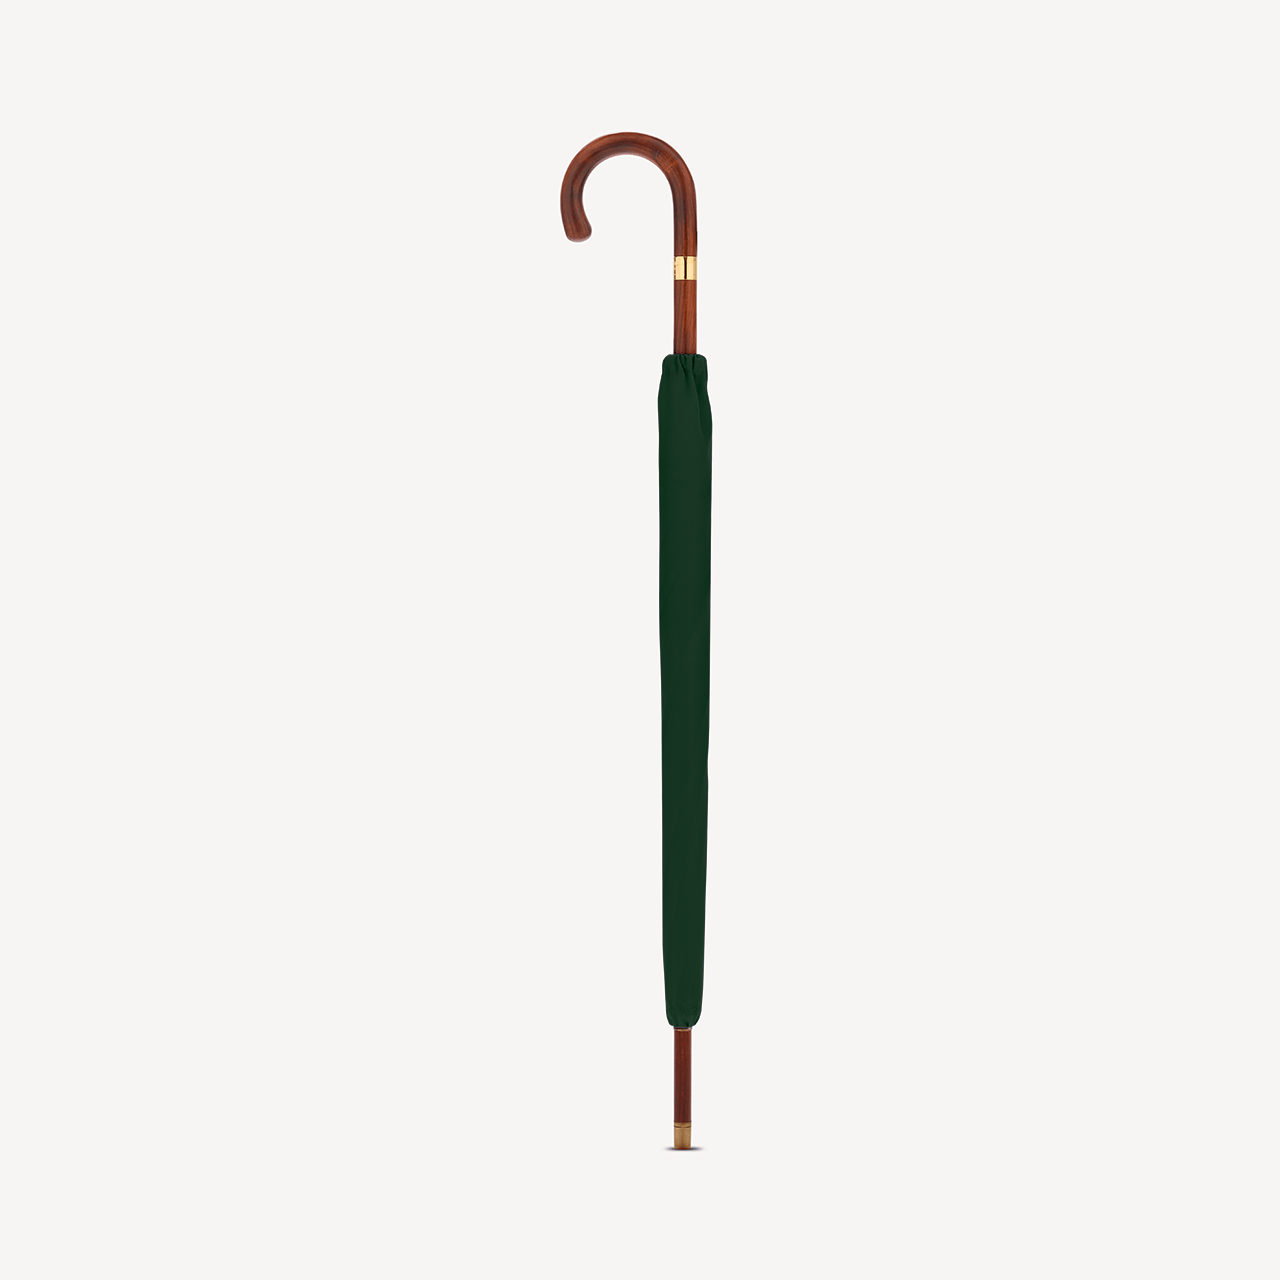 Stripped Cherry Umbrella for Women - Jaguar Green - Swaine